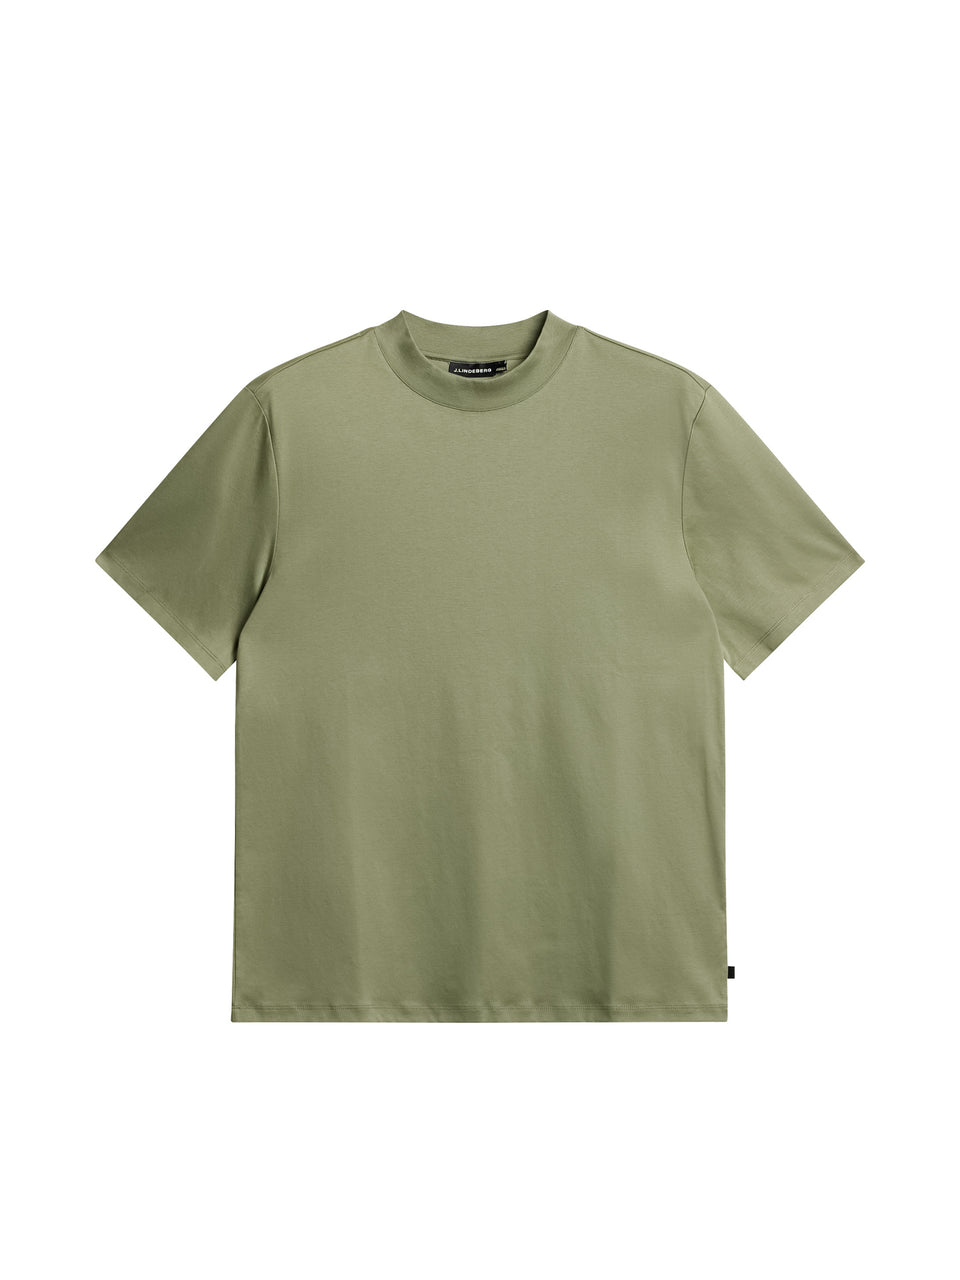 Ace Mock Neck T-shirt / Oil Green